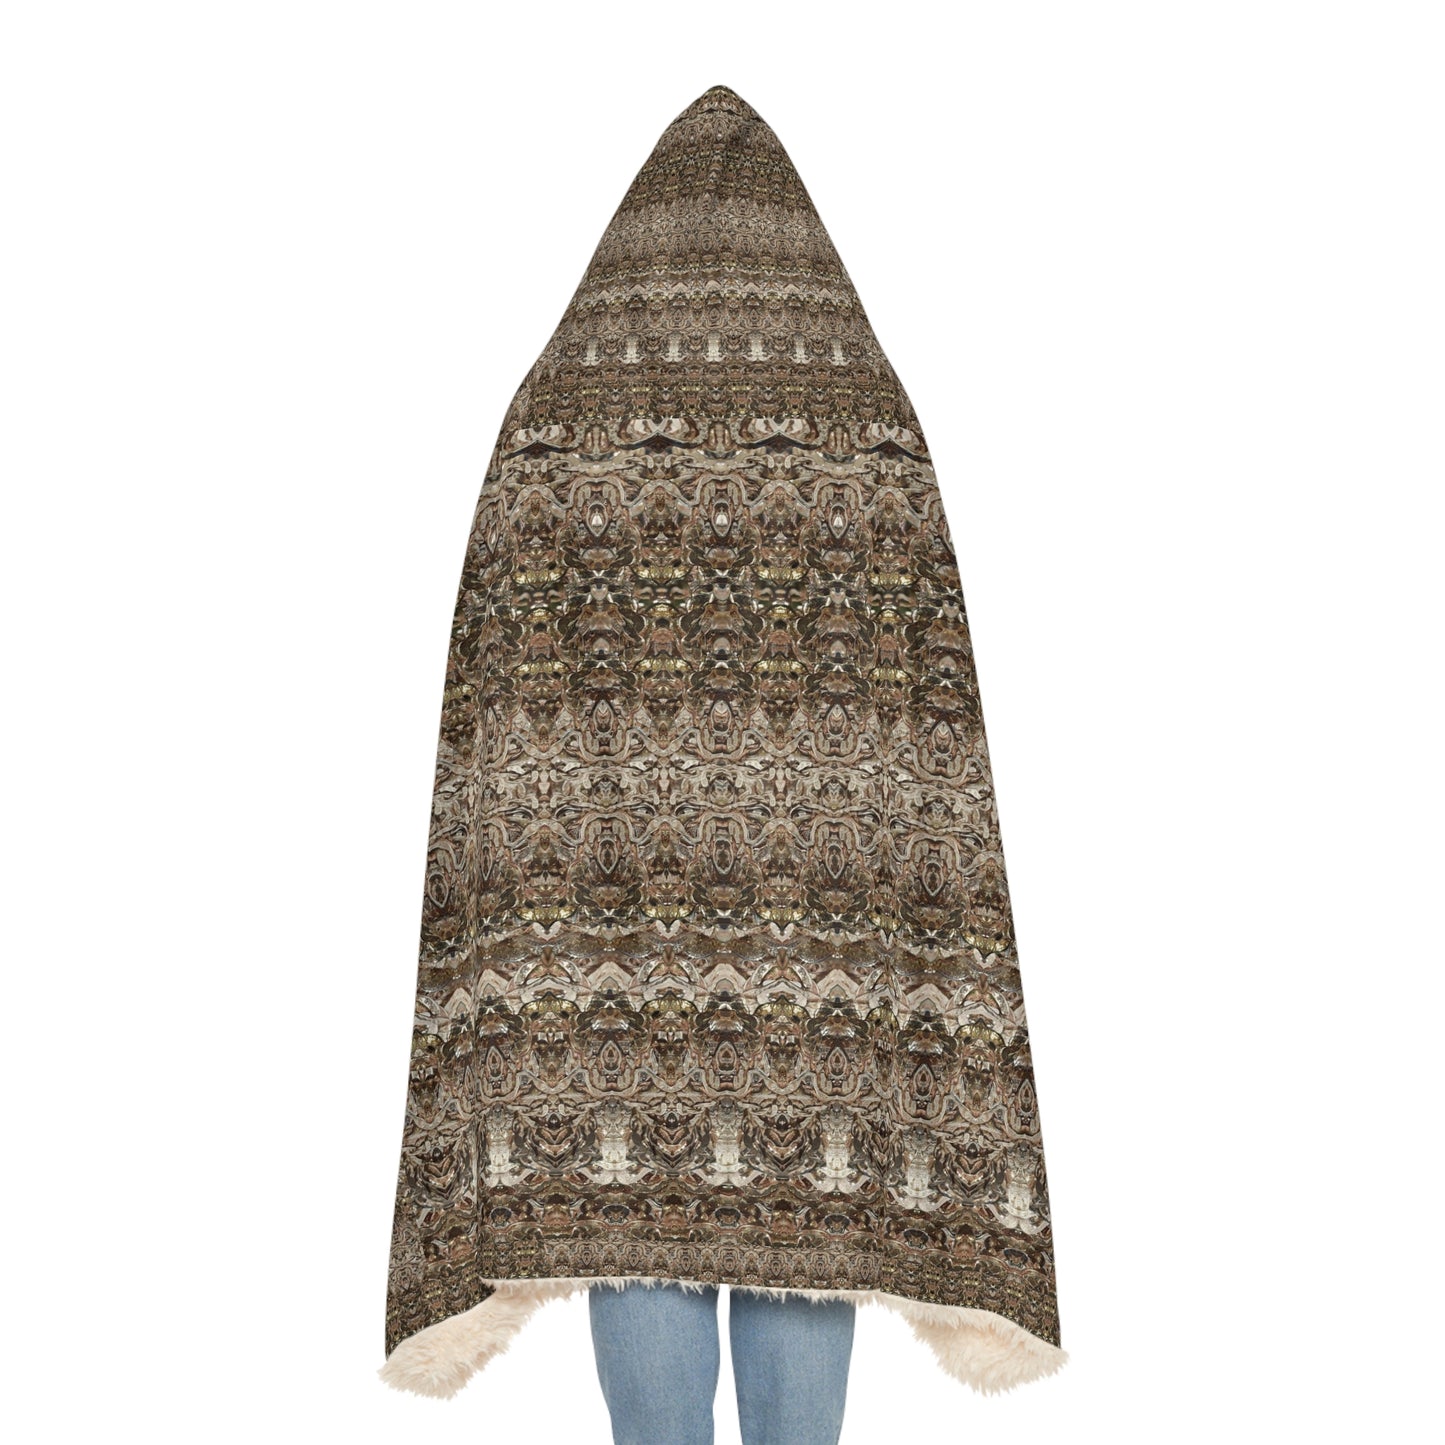 Hooded Snuggle Blanket (Samhain Dream Thaw 1 of 15 (Unus ex Quindecim) RJSTHw2023 RJS